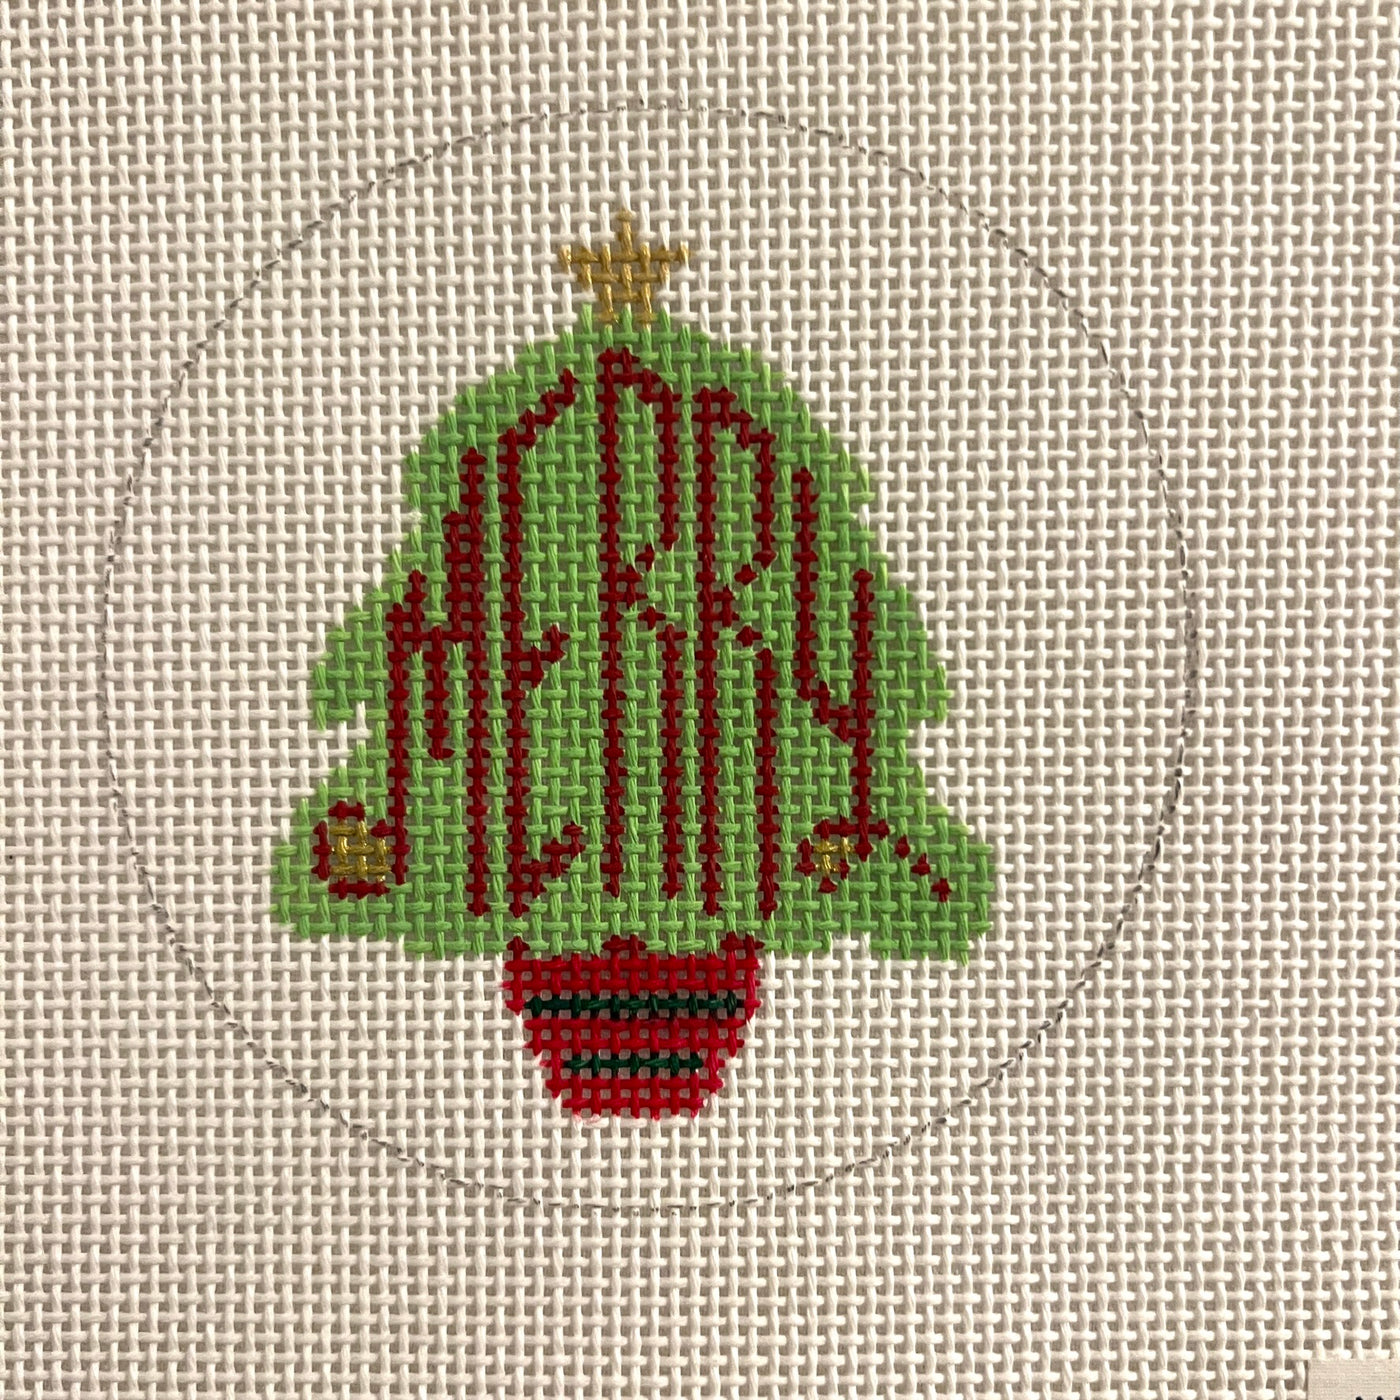 Merry Tree Ornament Needlepoint Canvas